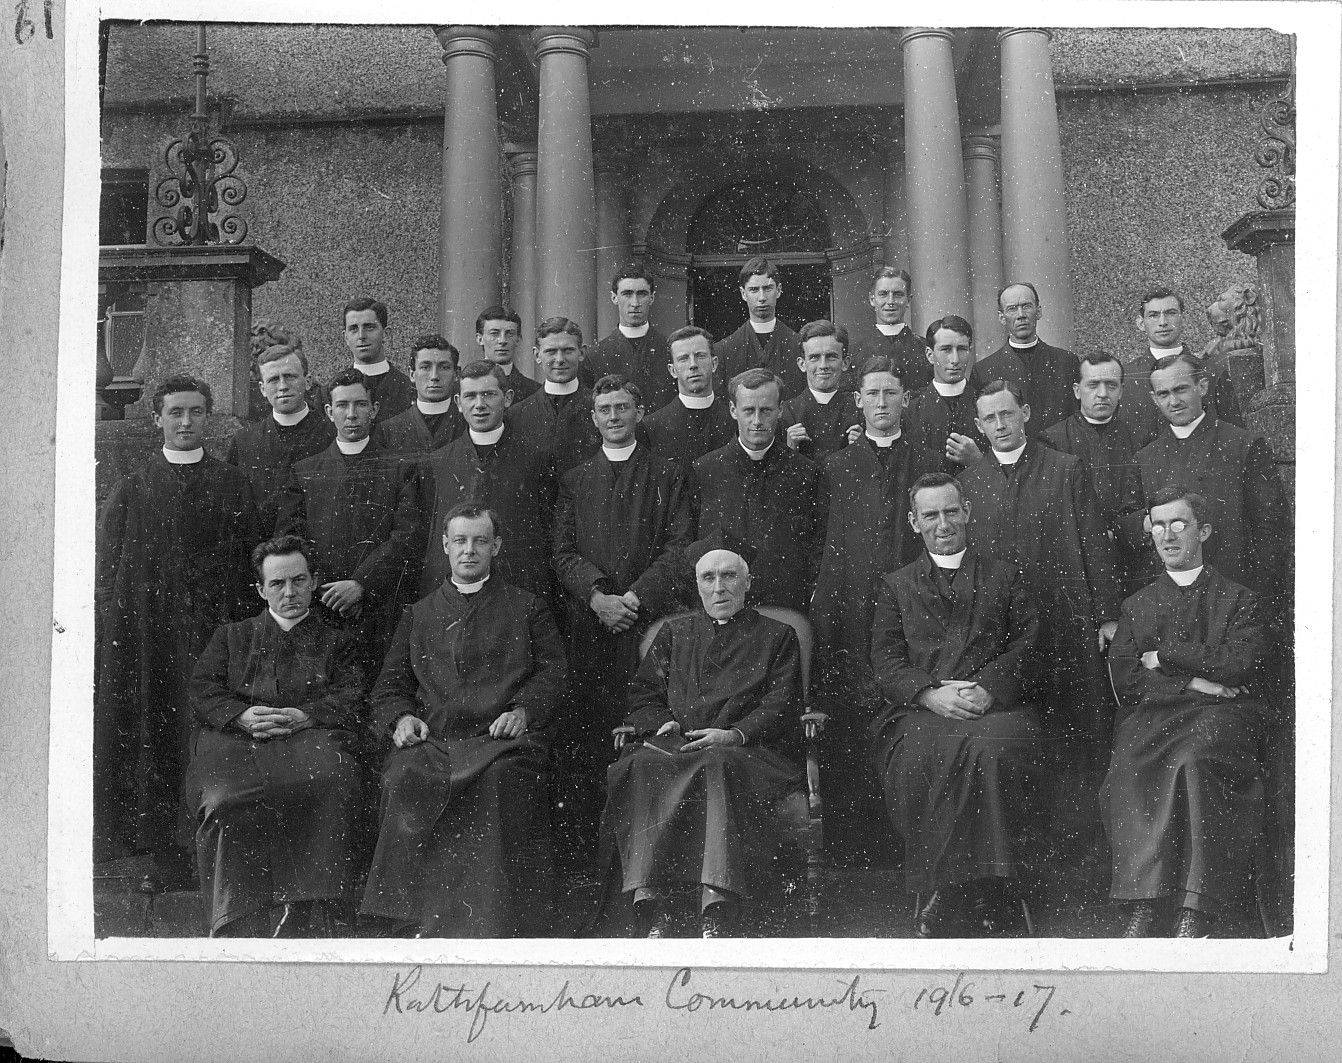 'Rathfarnham Community 1916-17.' Courtesy of the Irish Jesuit Archives. 